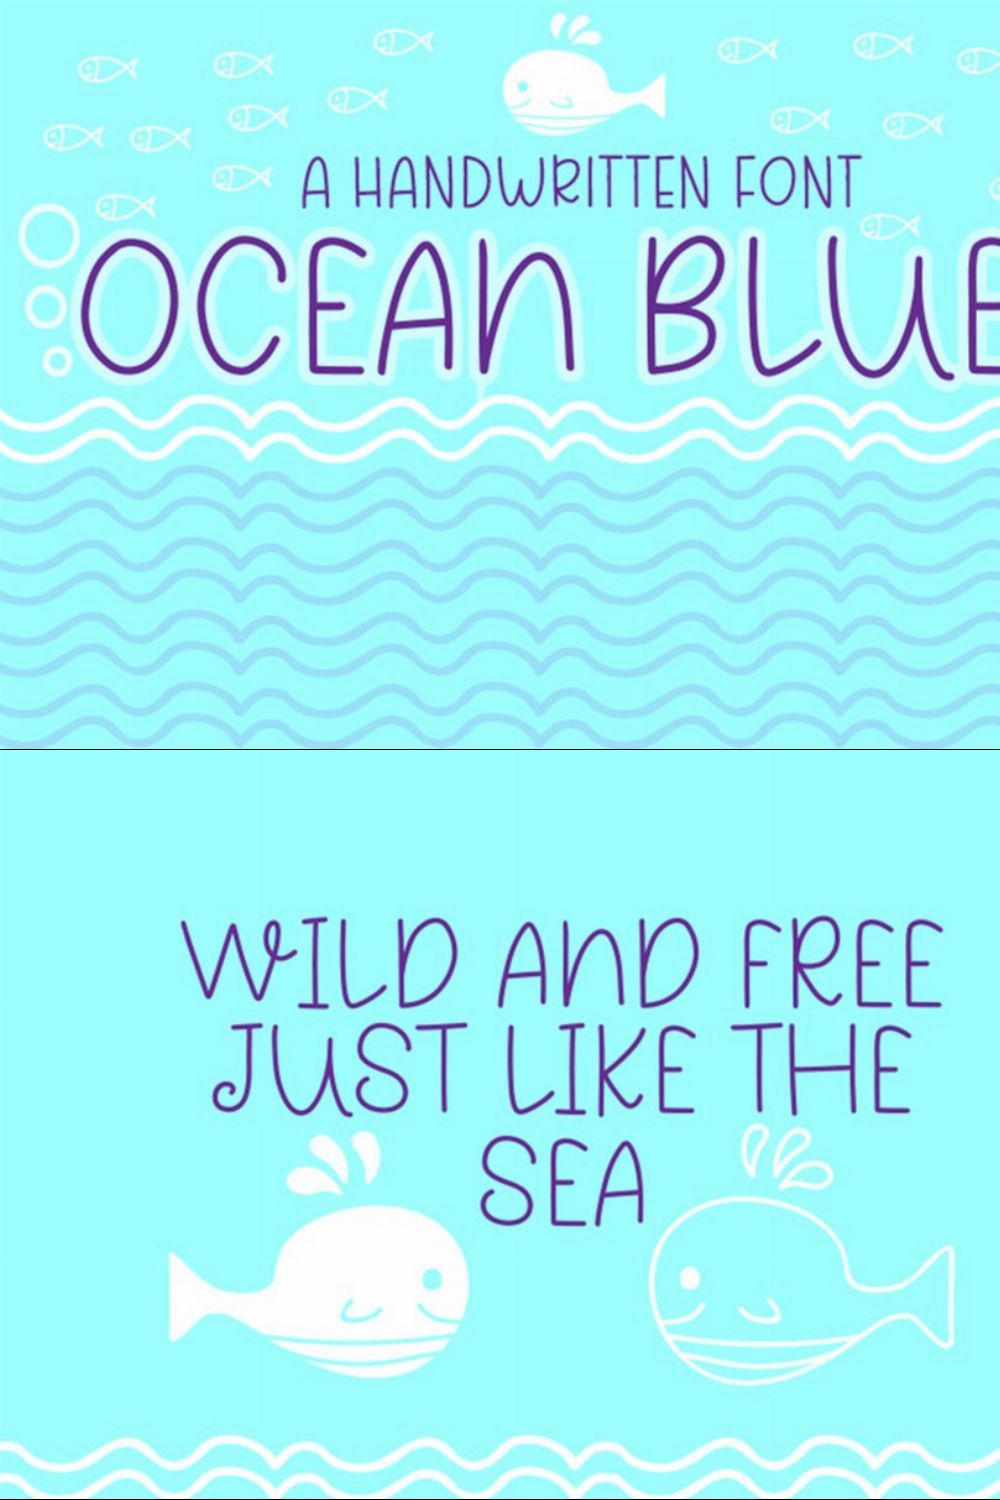 Ocean Blue pinterest preview image.